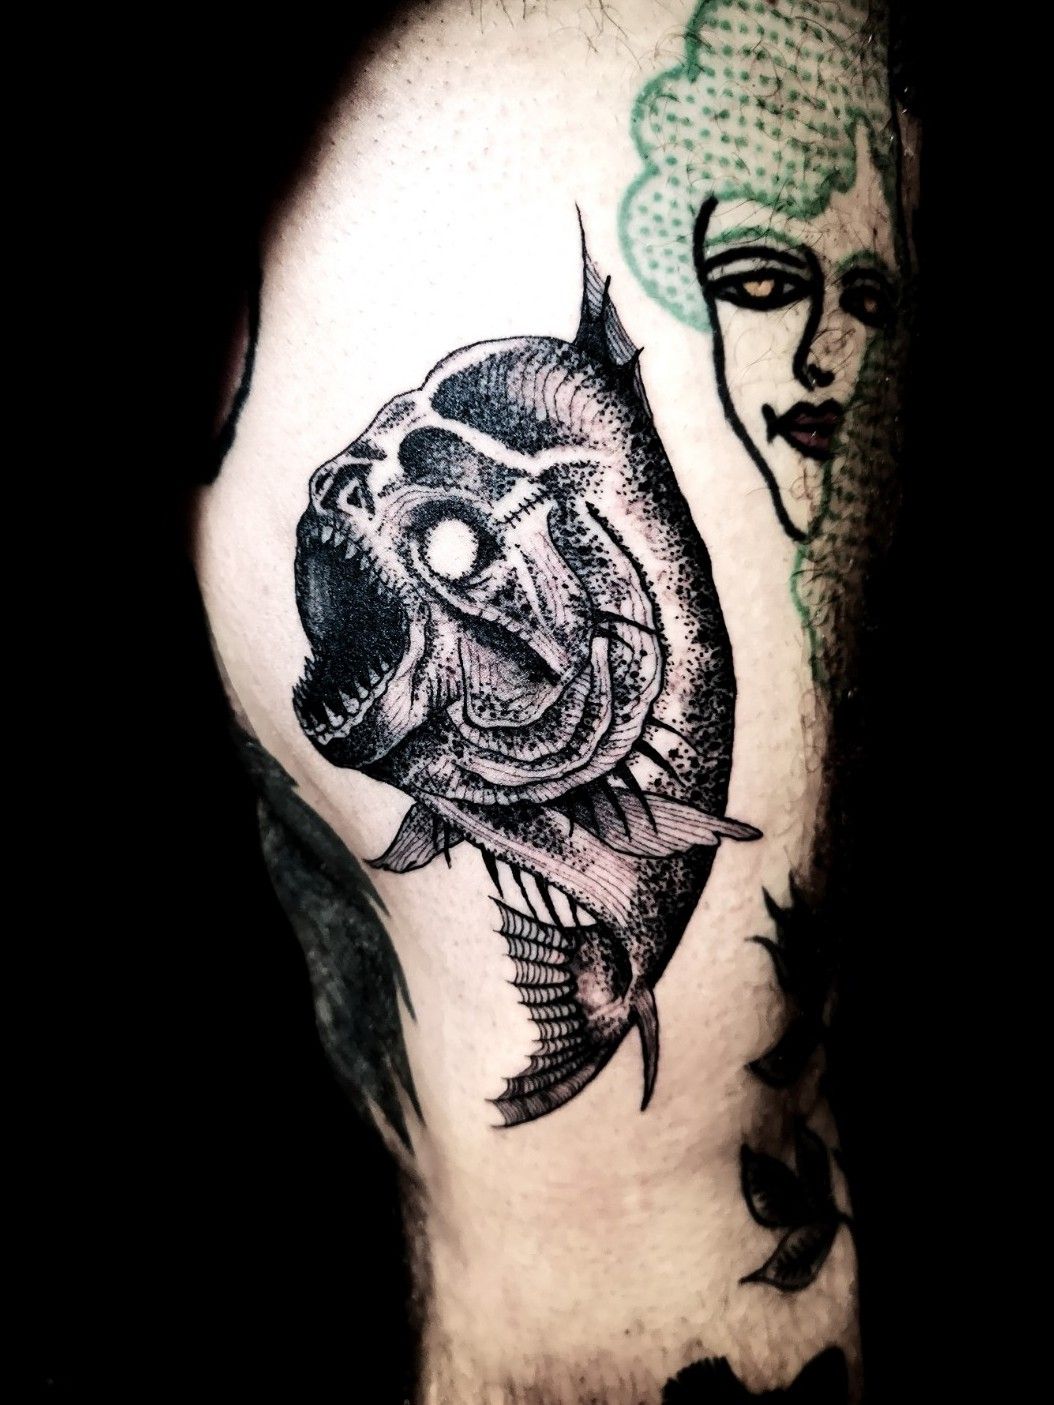 Cover-Ups - Piranha Tattoo